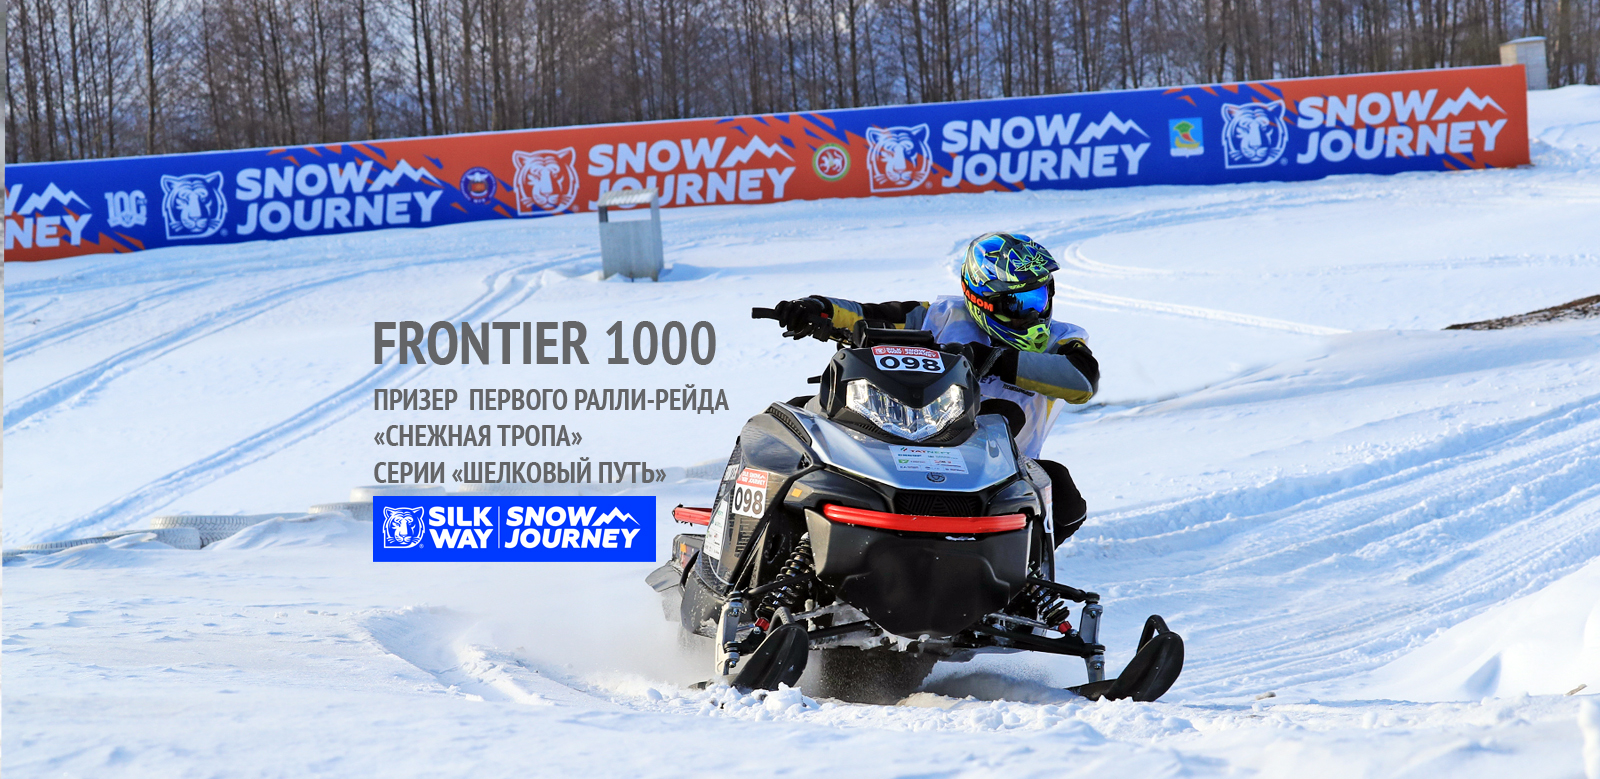 Снегоход Frontier 1000